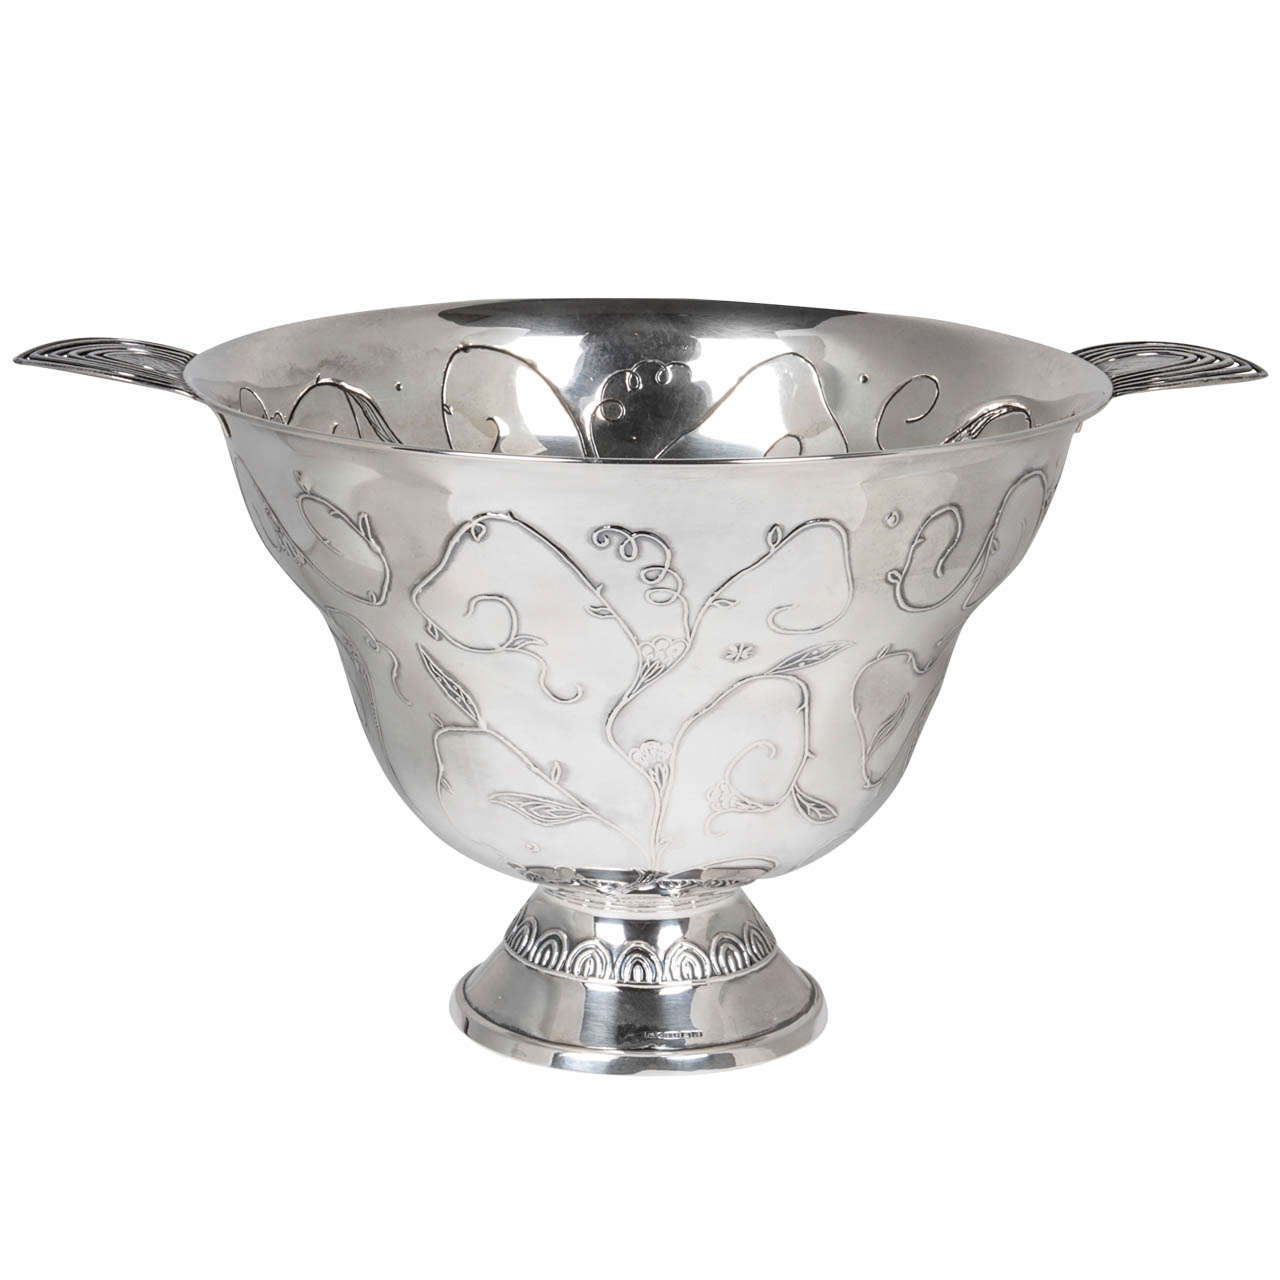 Scandinavian Modern / Art Deco Finnish Silver Presentation Bowl 1925 For Sale